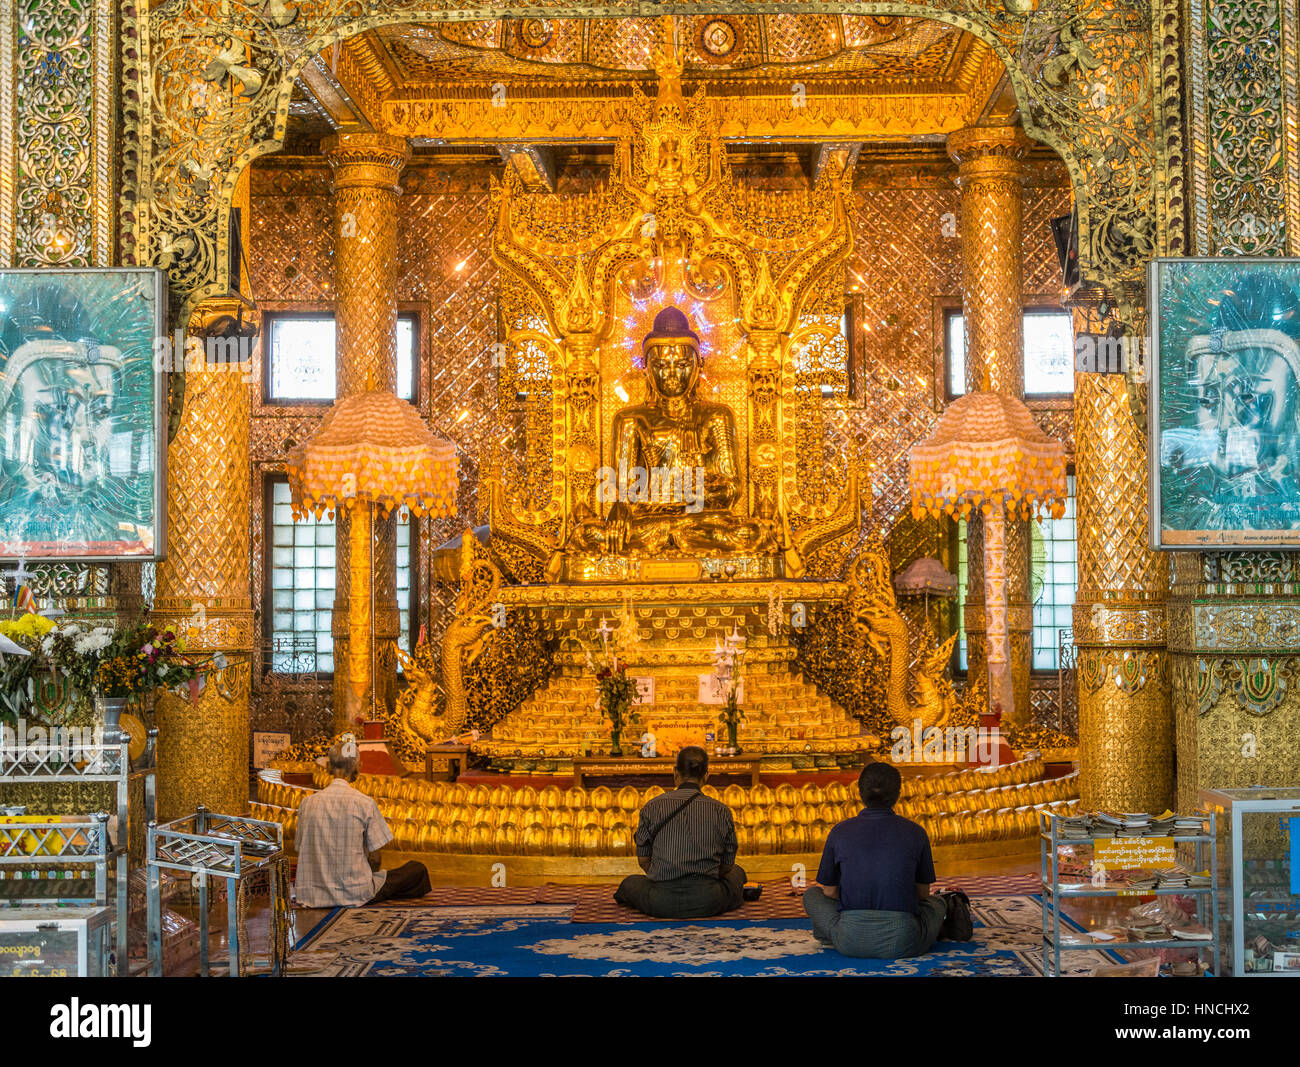 La gente del luogo pregando, dorate Budda seduto, Nan Oo Buddha, Nan Oo Buddha Hall, Botataung Pagoda, tempio buddista, Yangon, Myanmar Foto Stock